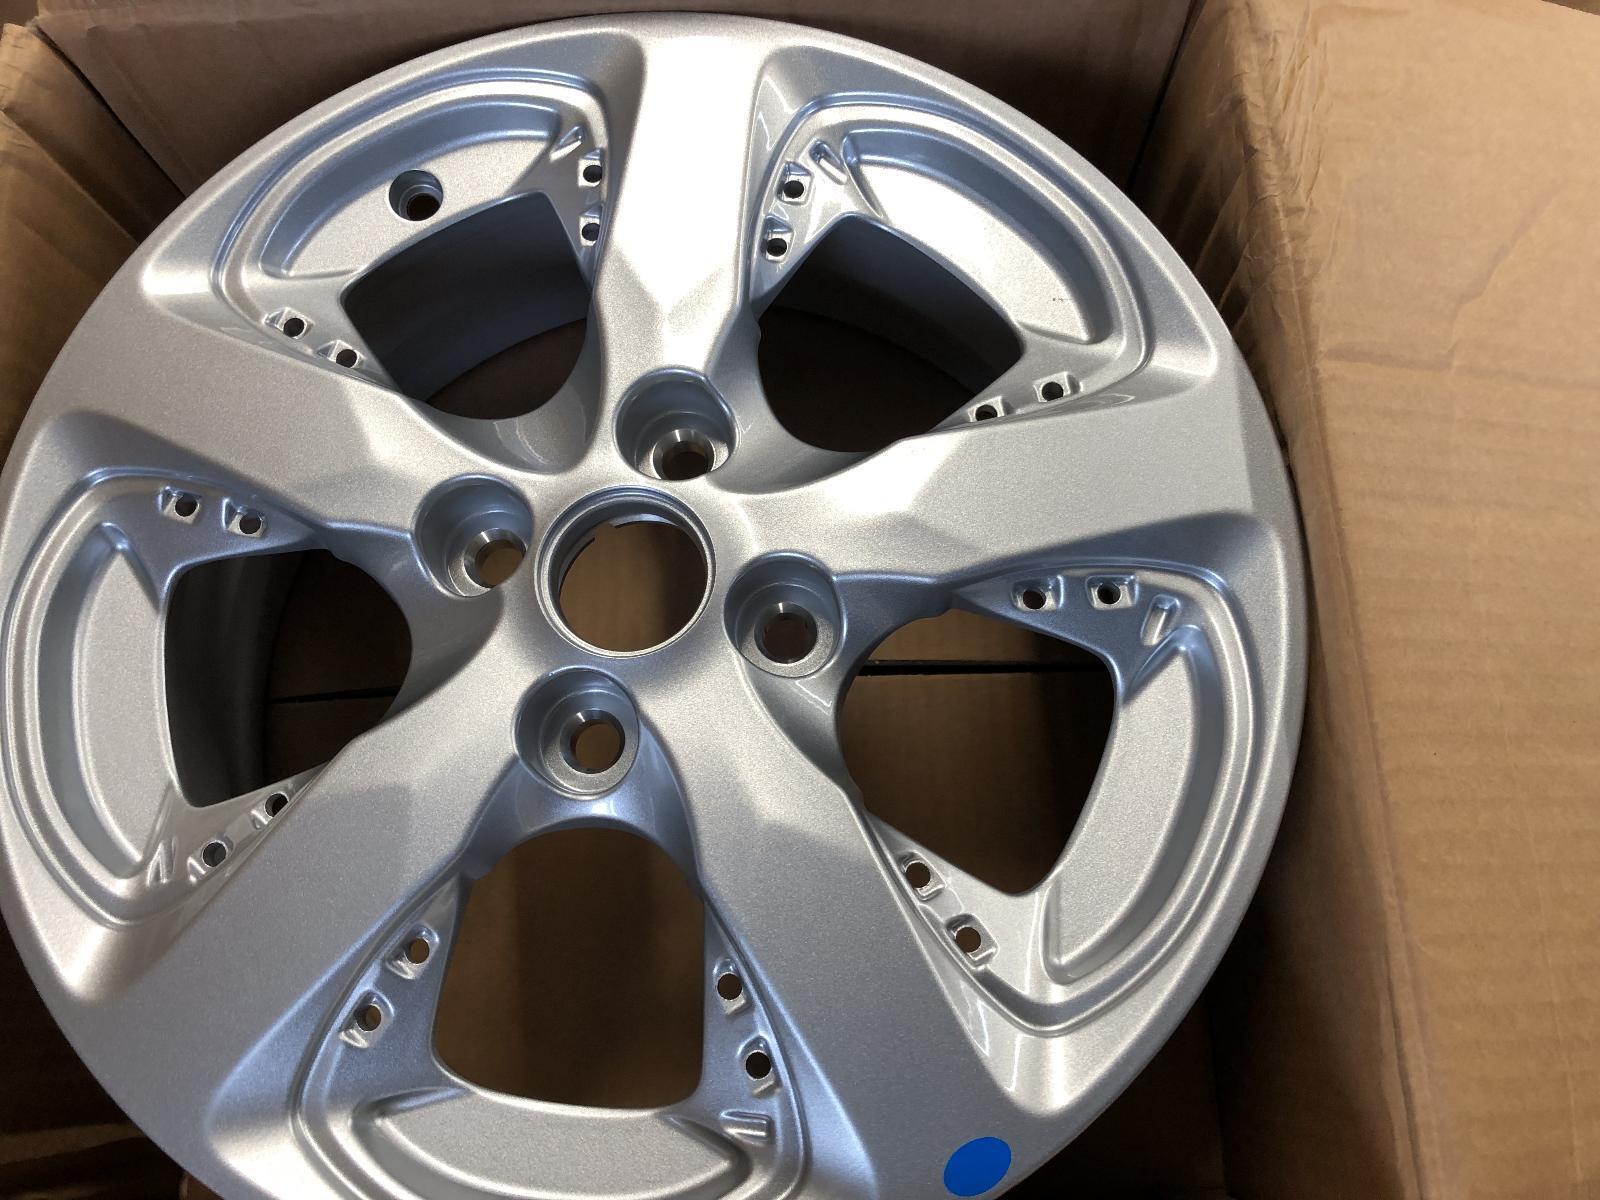 2016 CHEVROLET SPARK Wheel 15x6 aluminum 5 solid spoke silver OEM 16